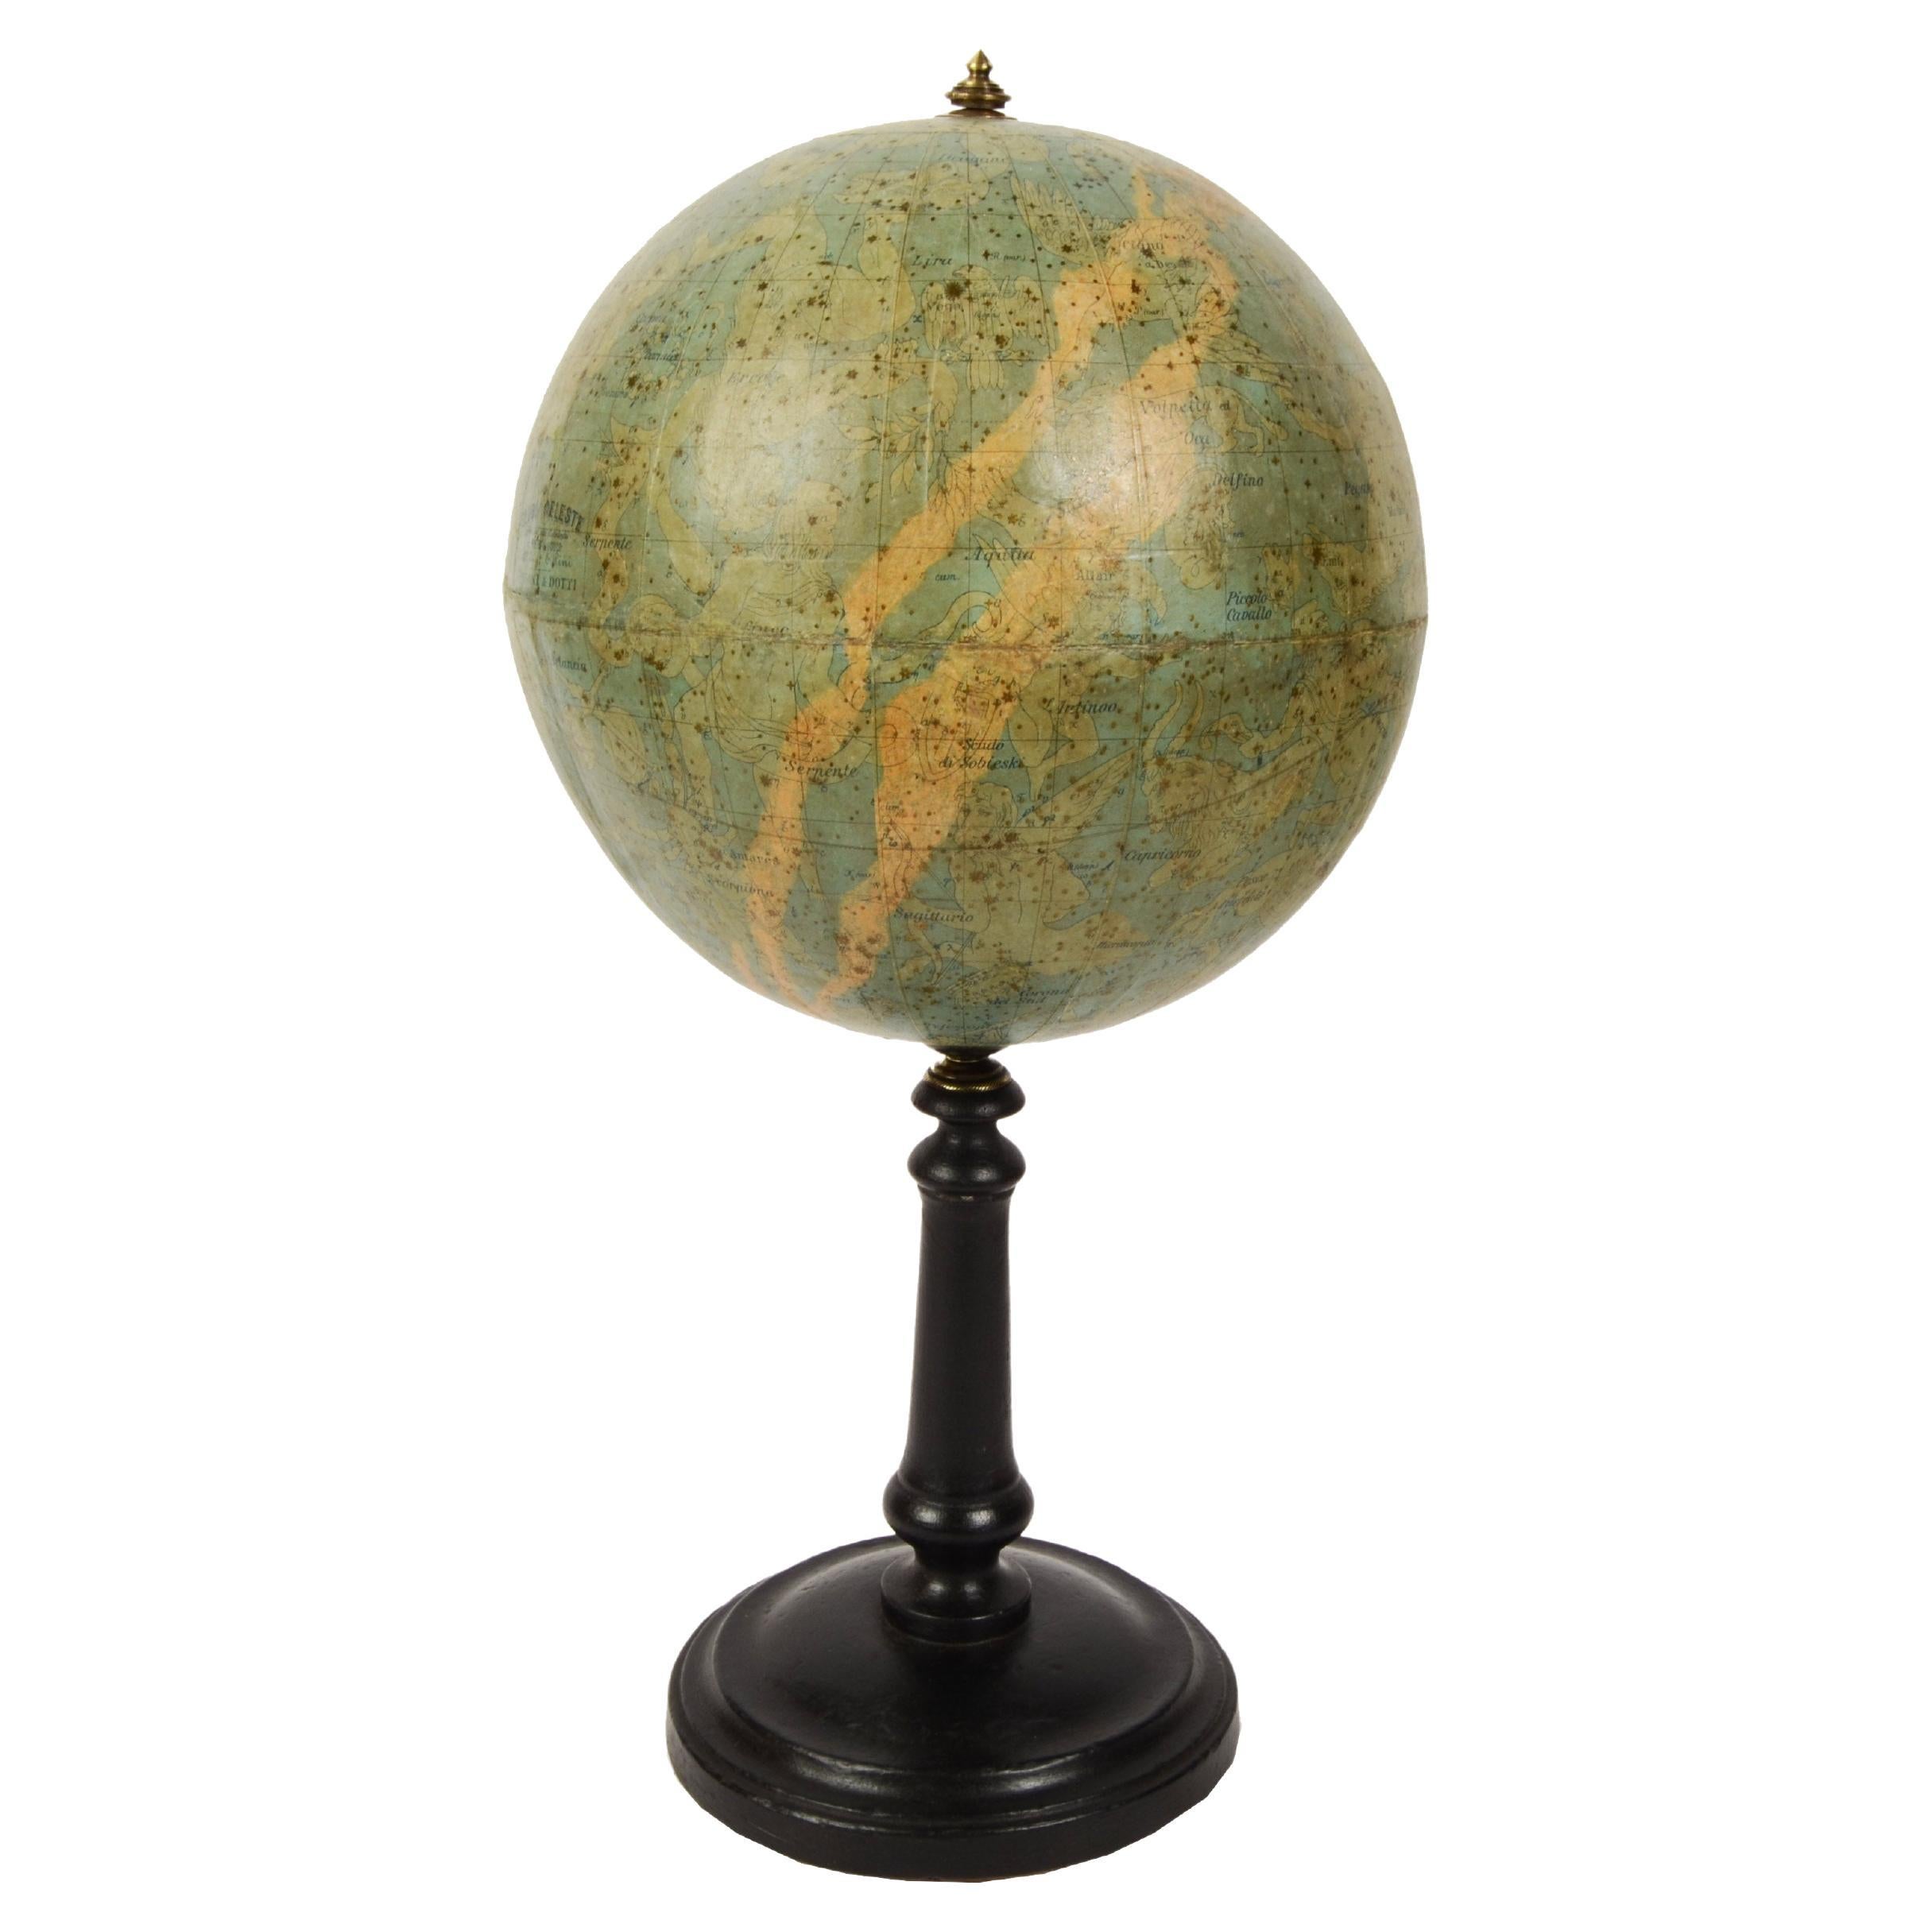 1889er Jahre Antike Celestial Globe signiert Gussoni e Dotti Milano Papier Maché Kugel im Angebot